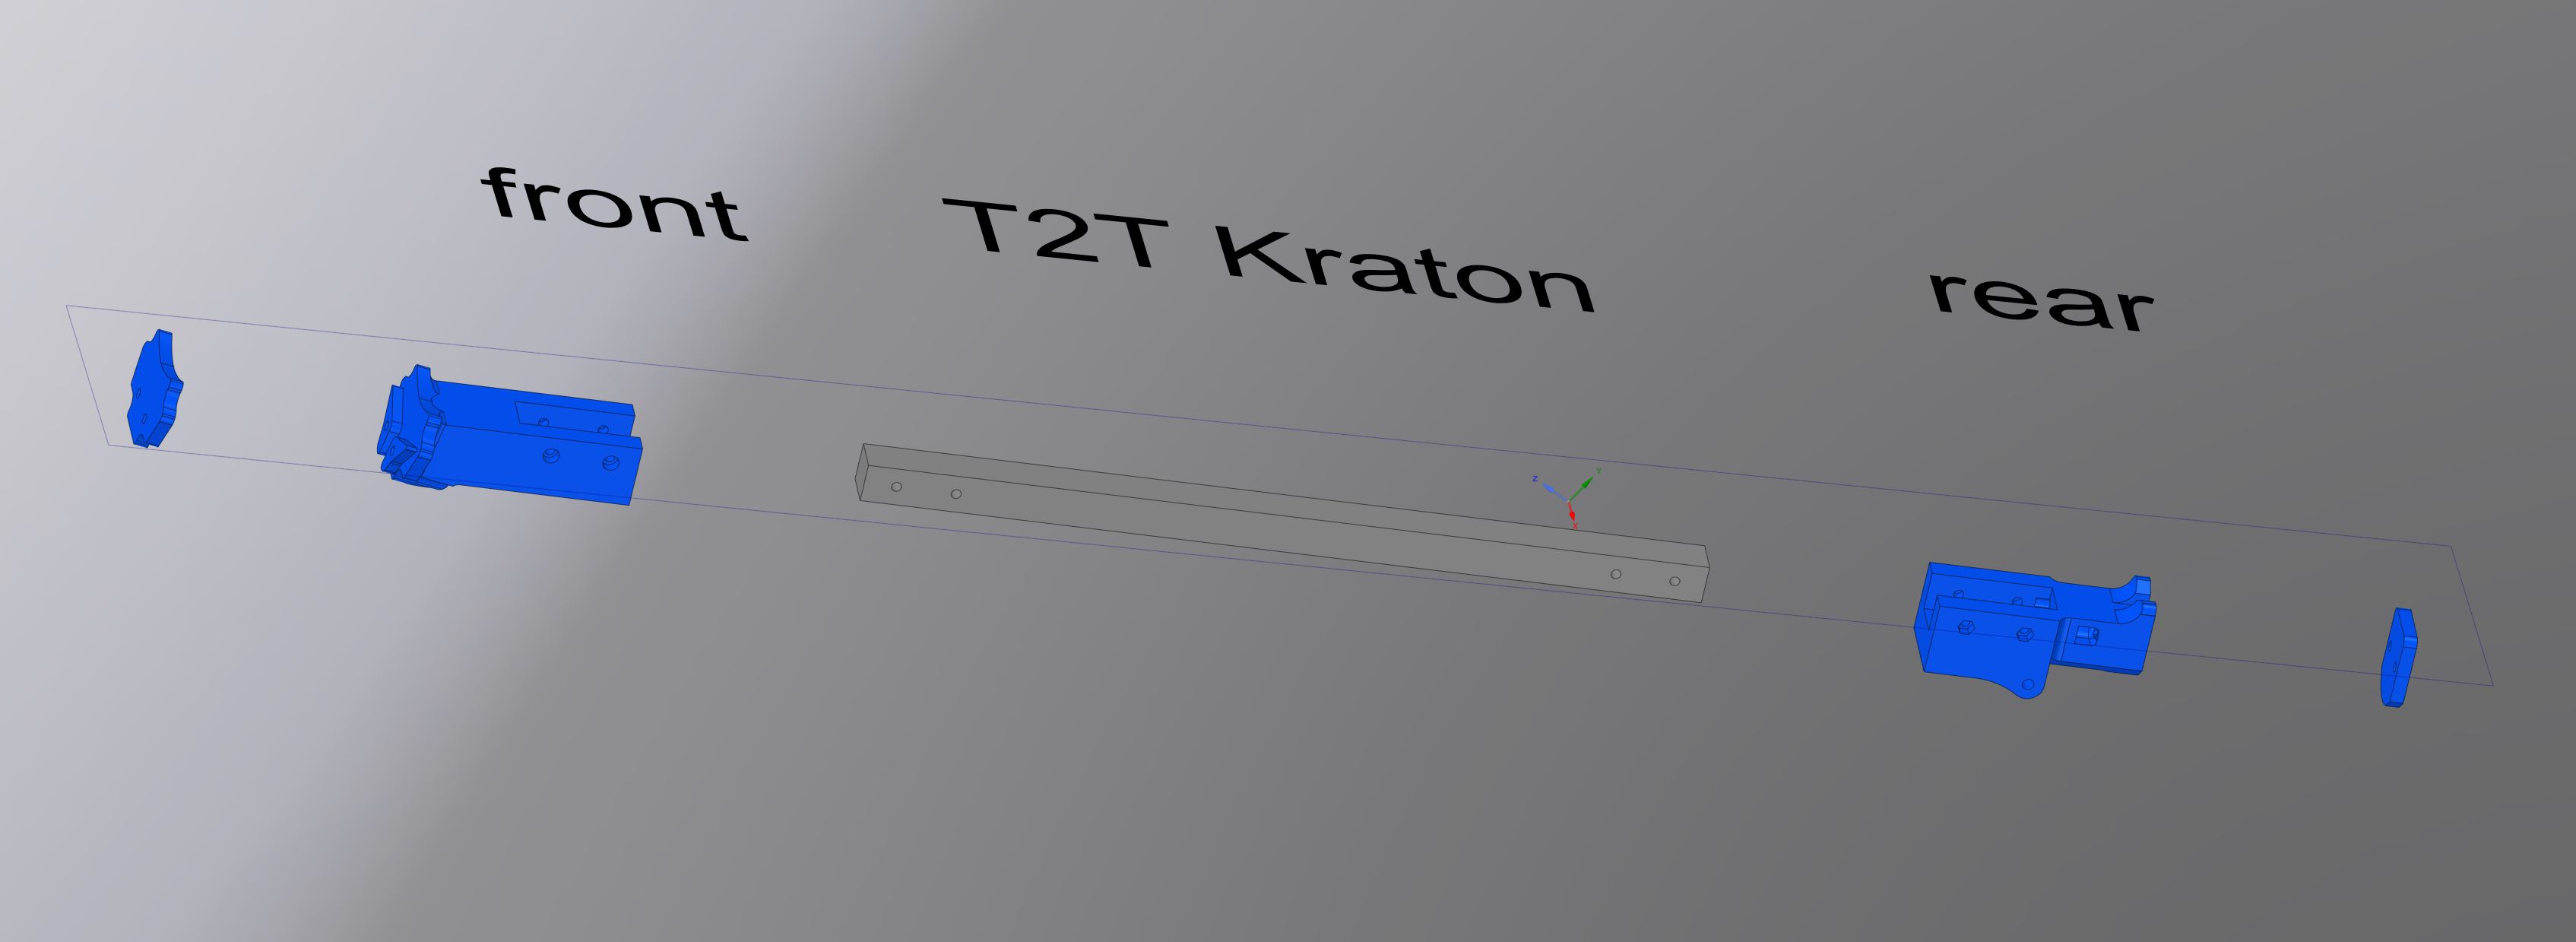 T2T Kraton CAD.JPG